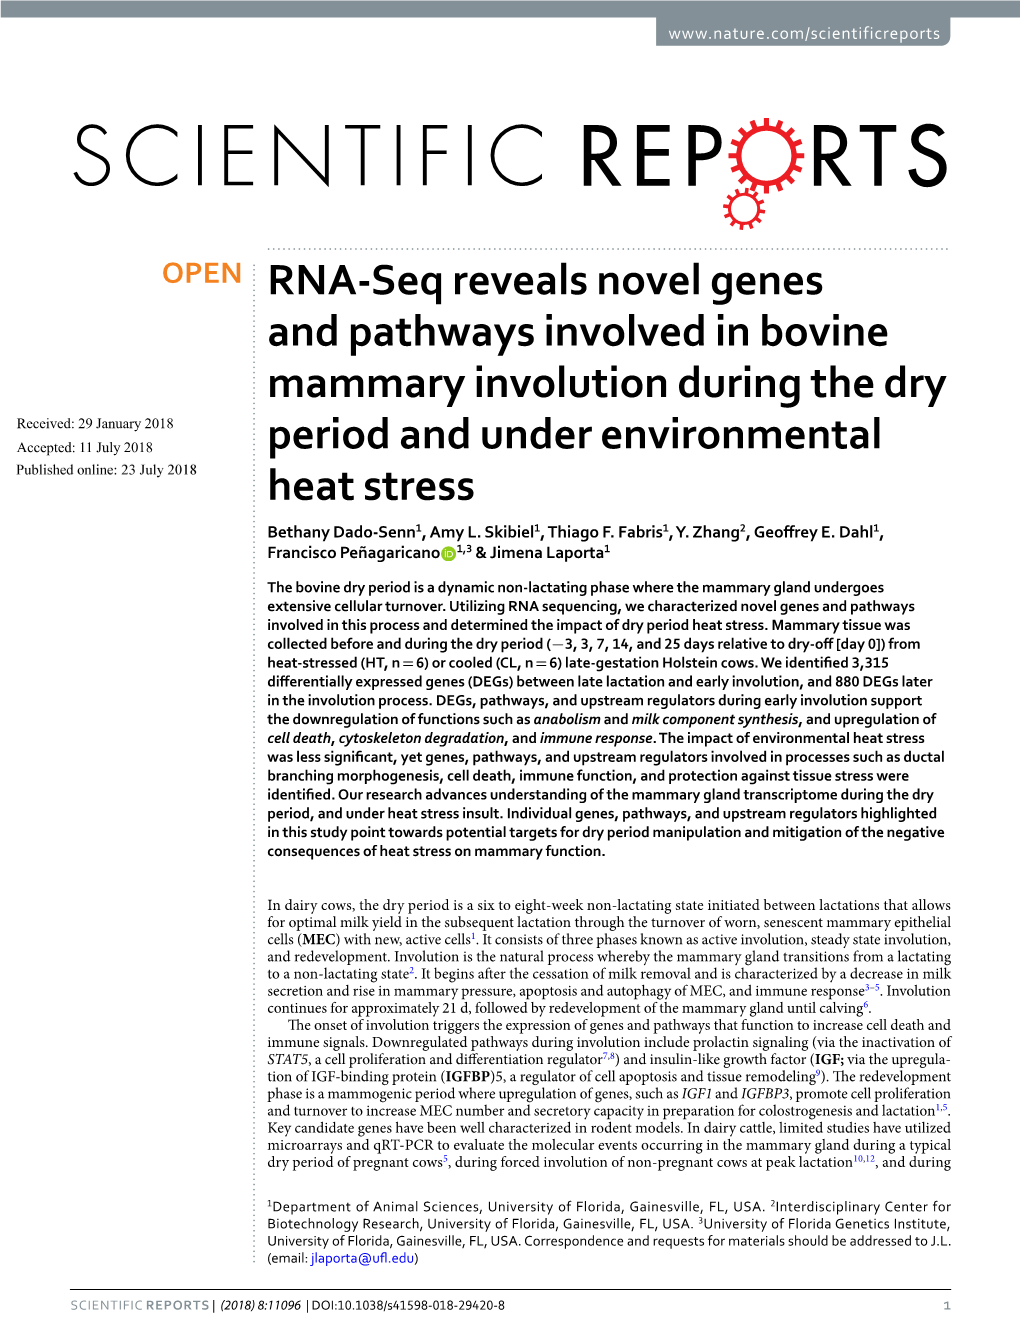 RNA-Seq Reveals Novel Genes and Pathways Involved in Bovine